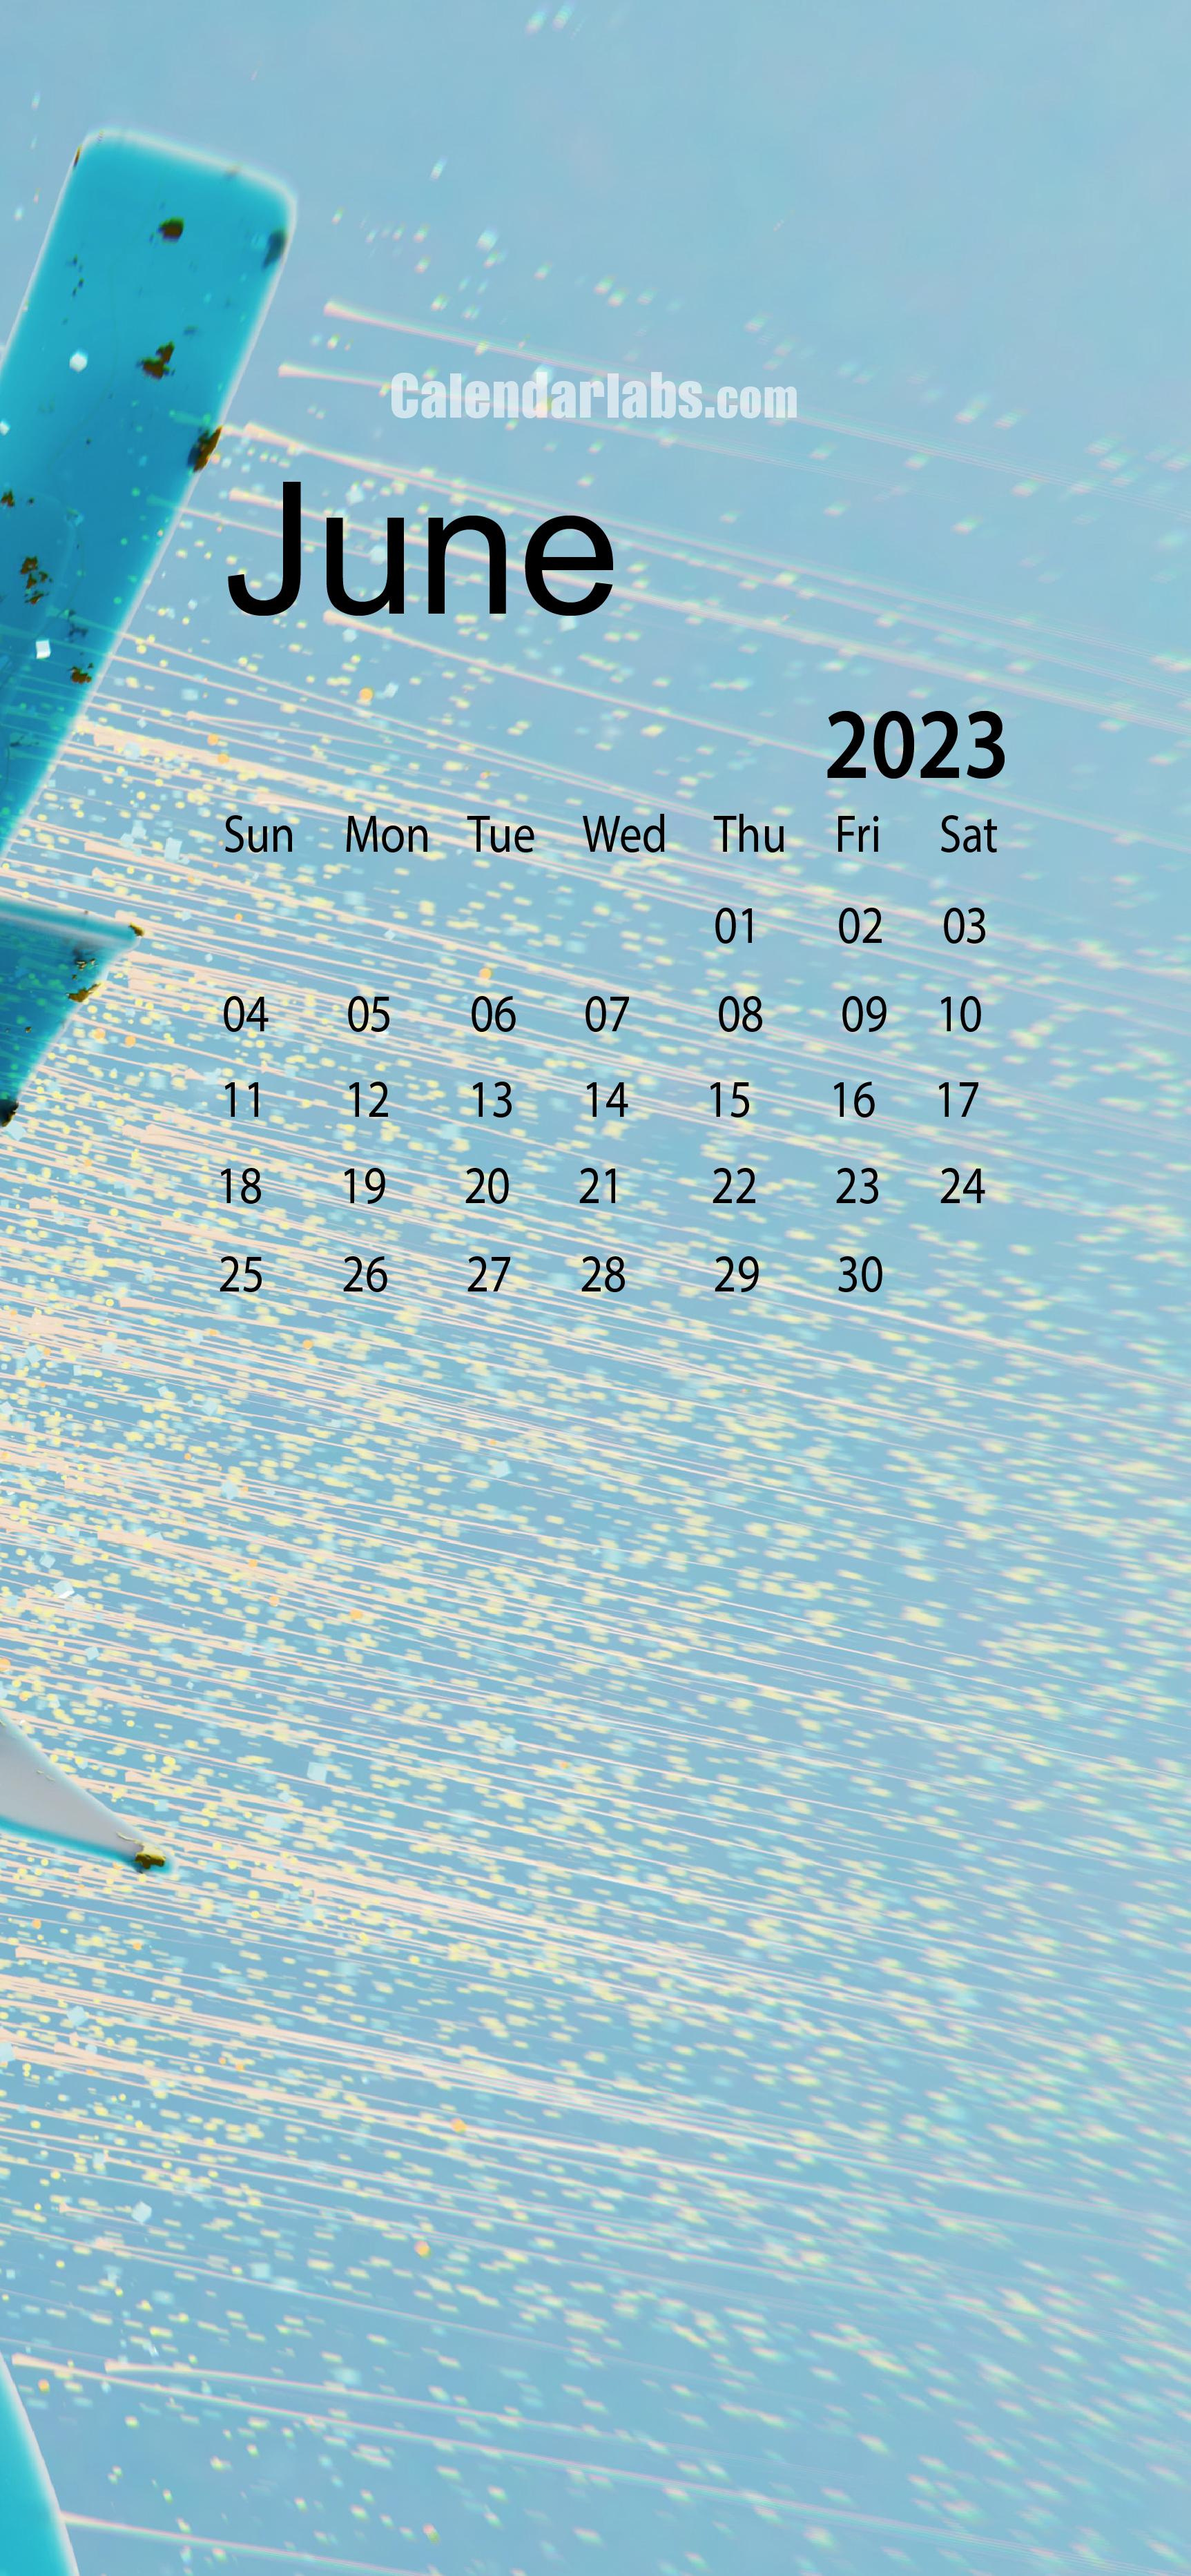 June Desktop Wallpaper Calendar Calendarlabs